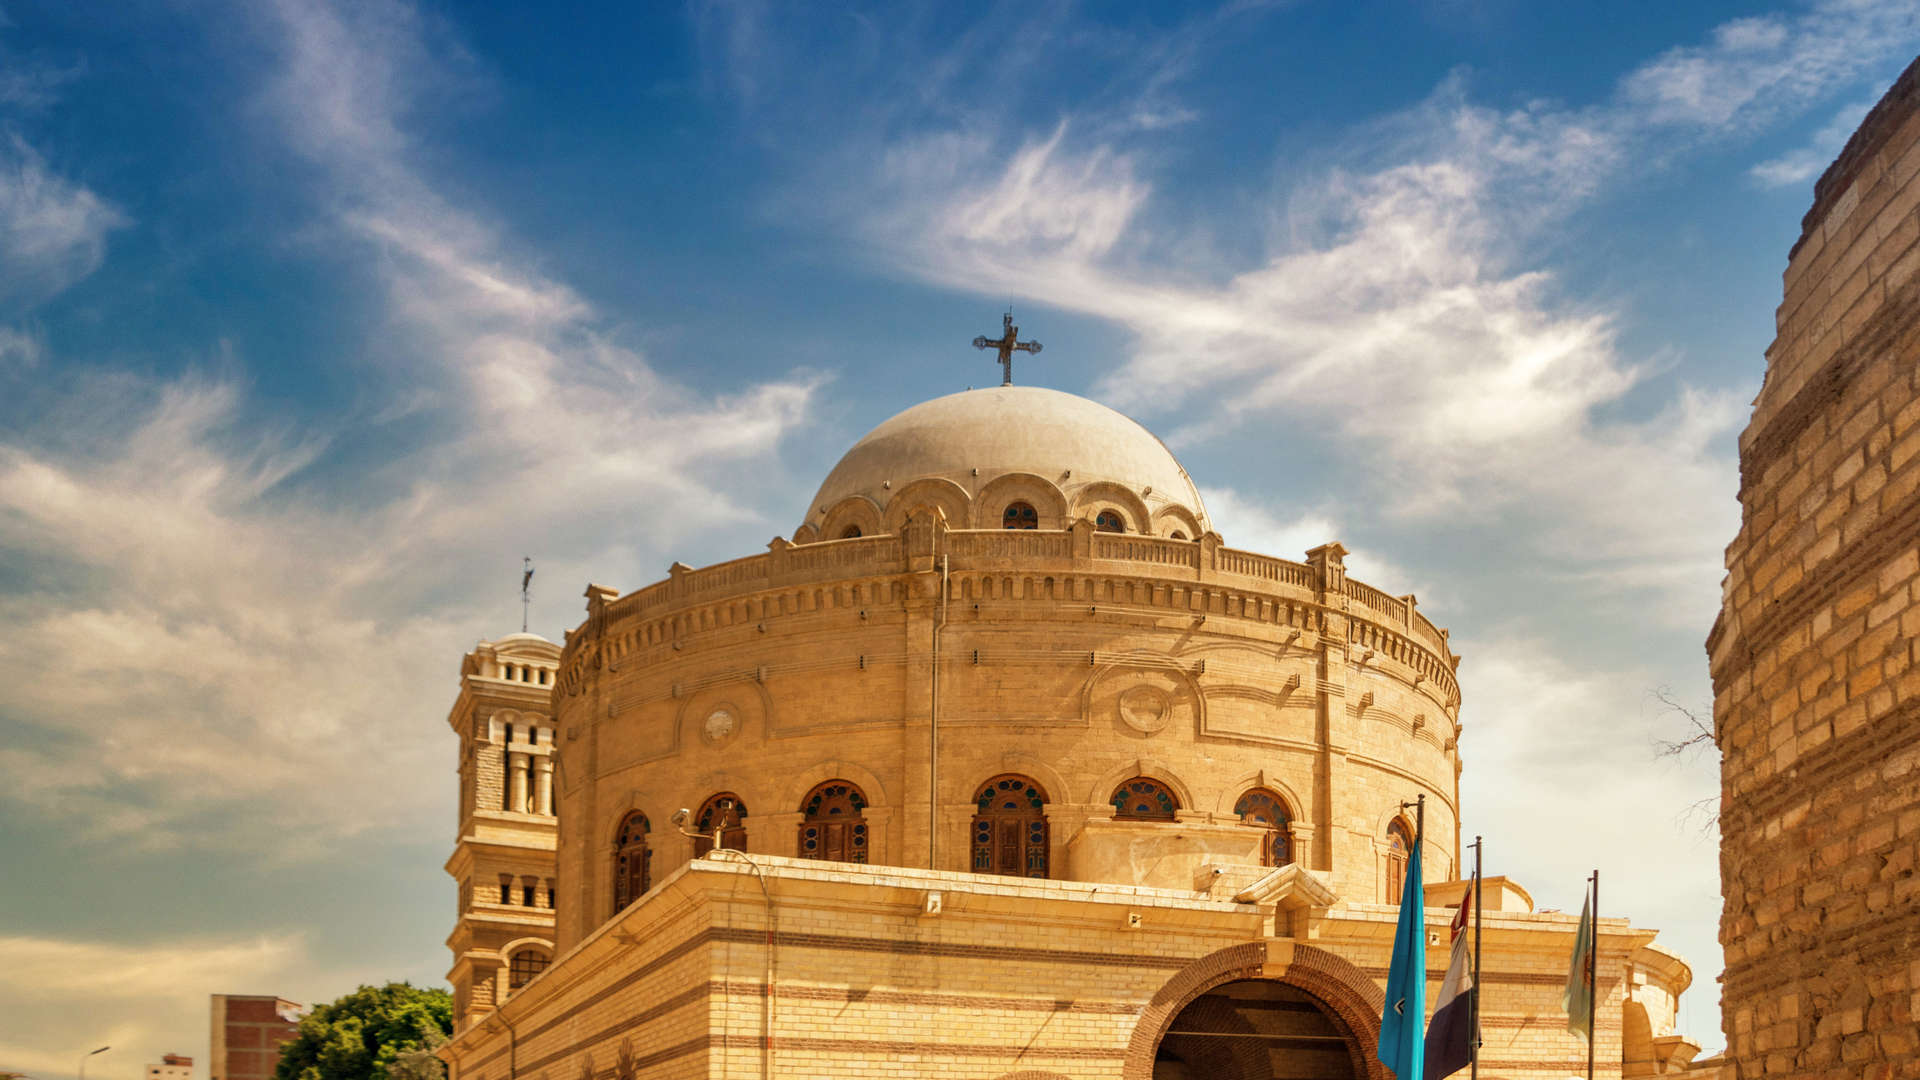 La iglesia de San Jorge, del siglo X, en el Viejo Cairo